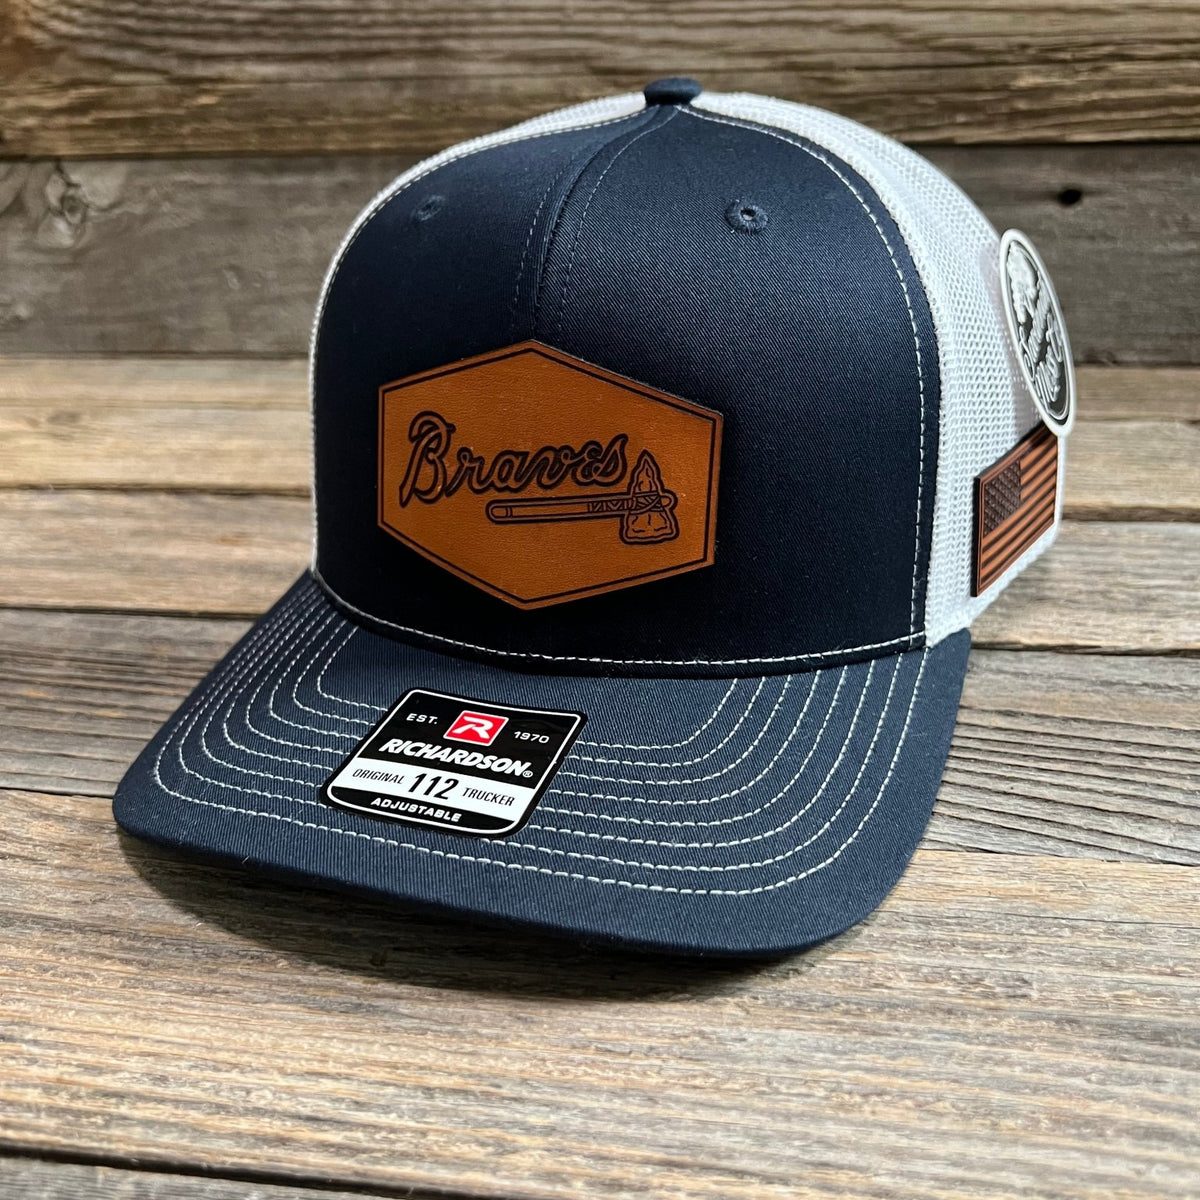 Custom Atlanta Braves Feather Hat